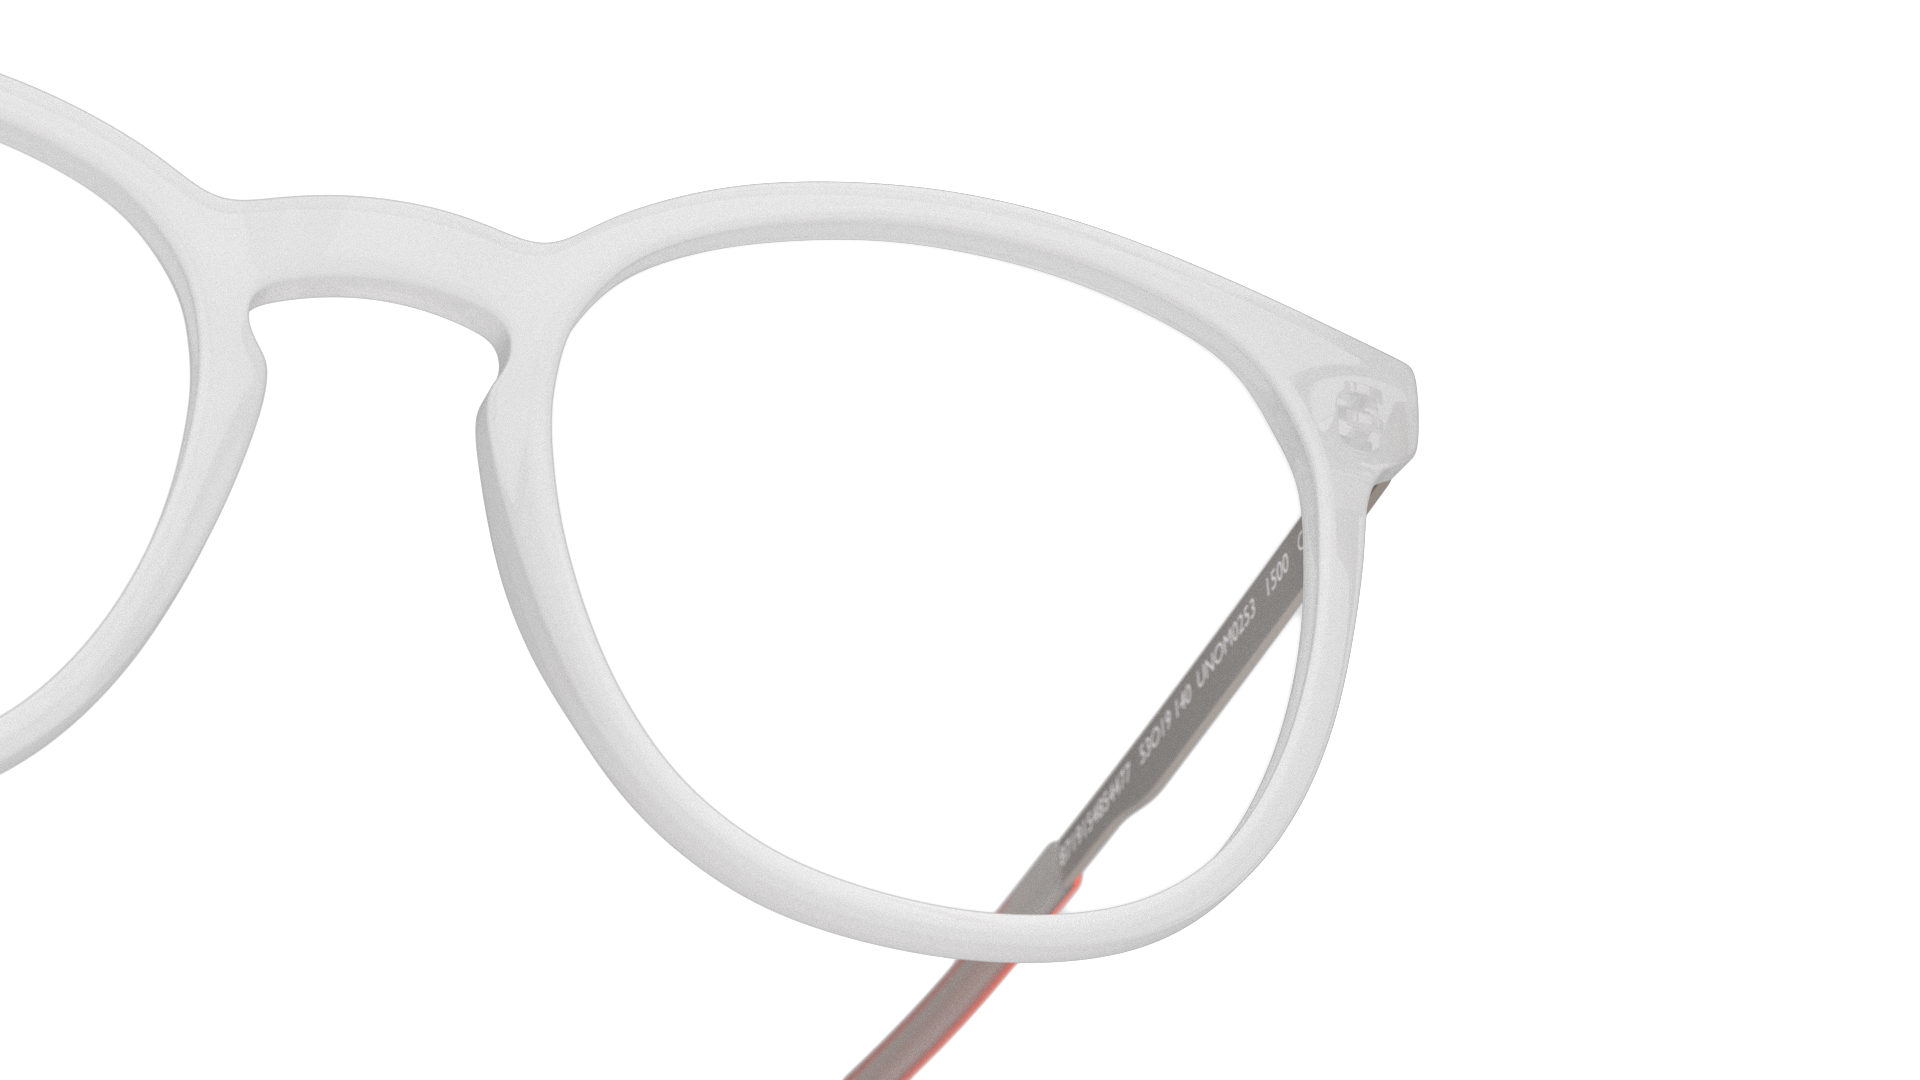 Detail01 Unofficial UNOM0253 (TS00) Glasses Transparent / Transparent, White